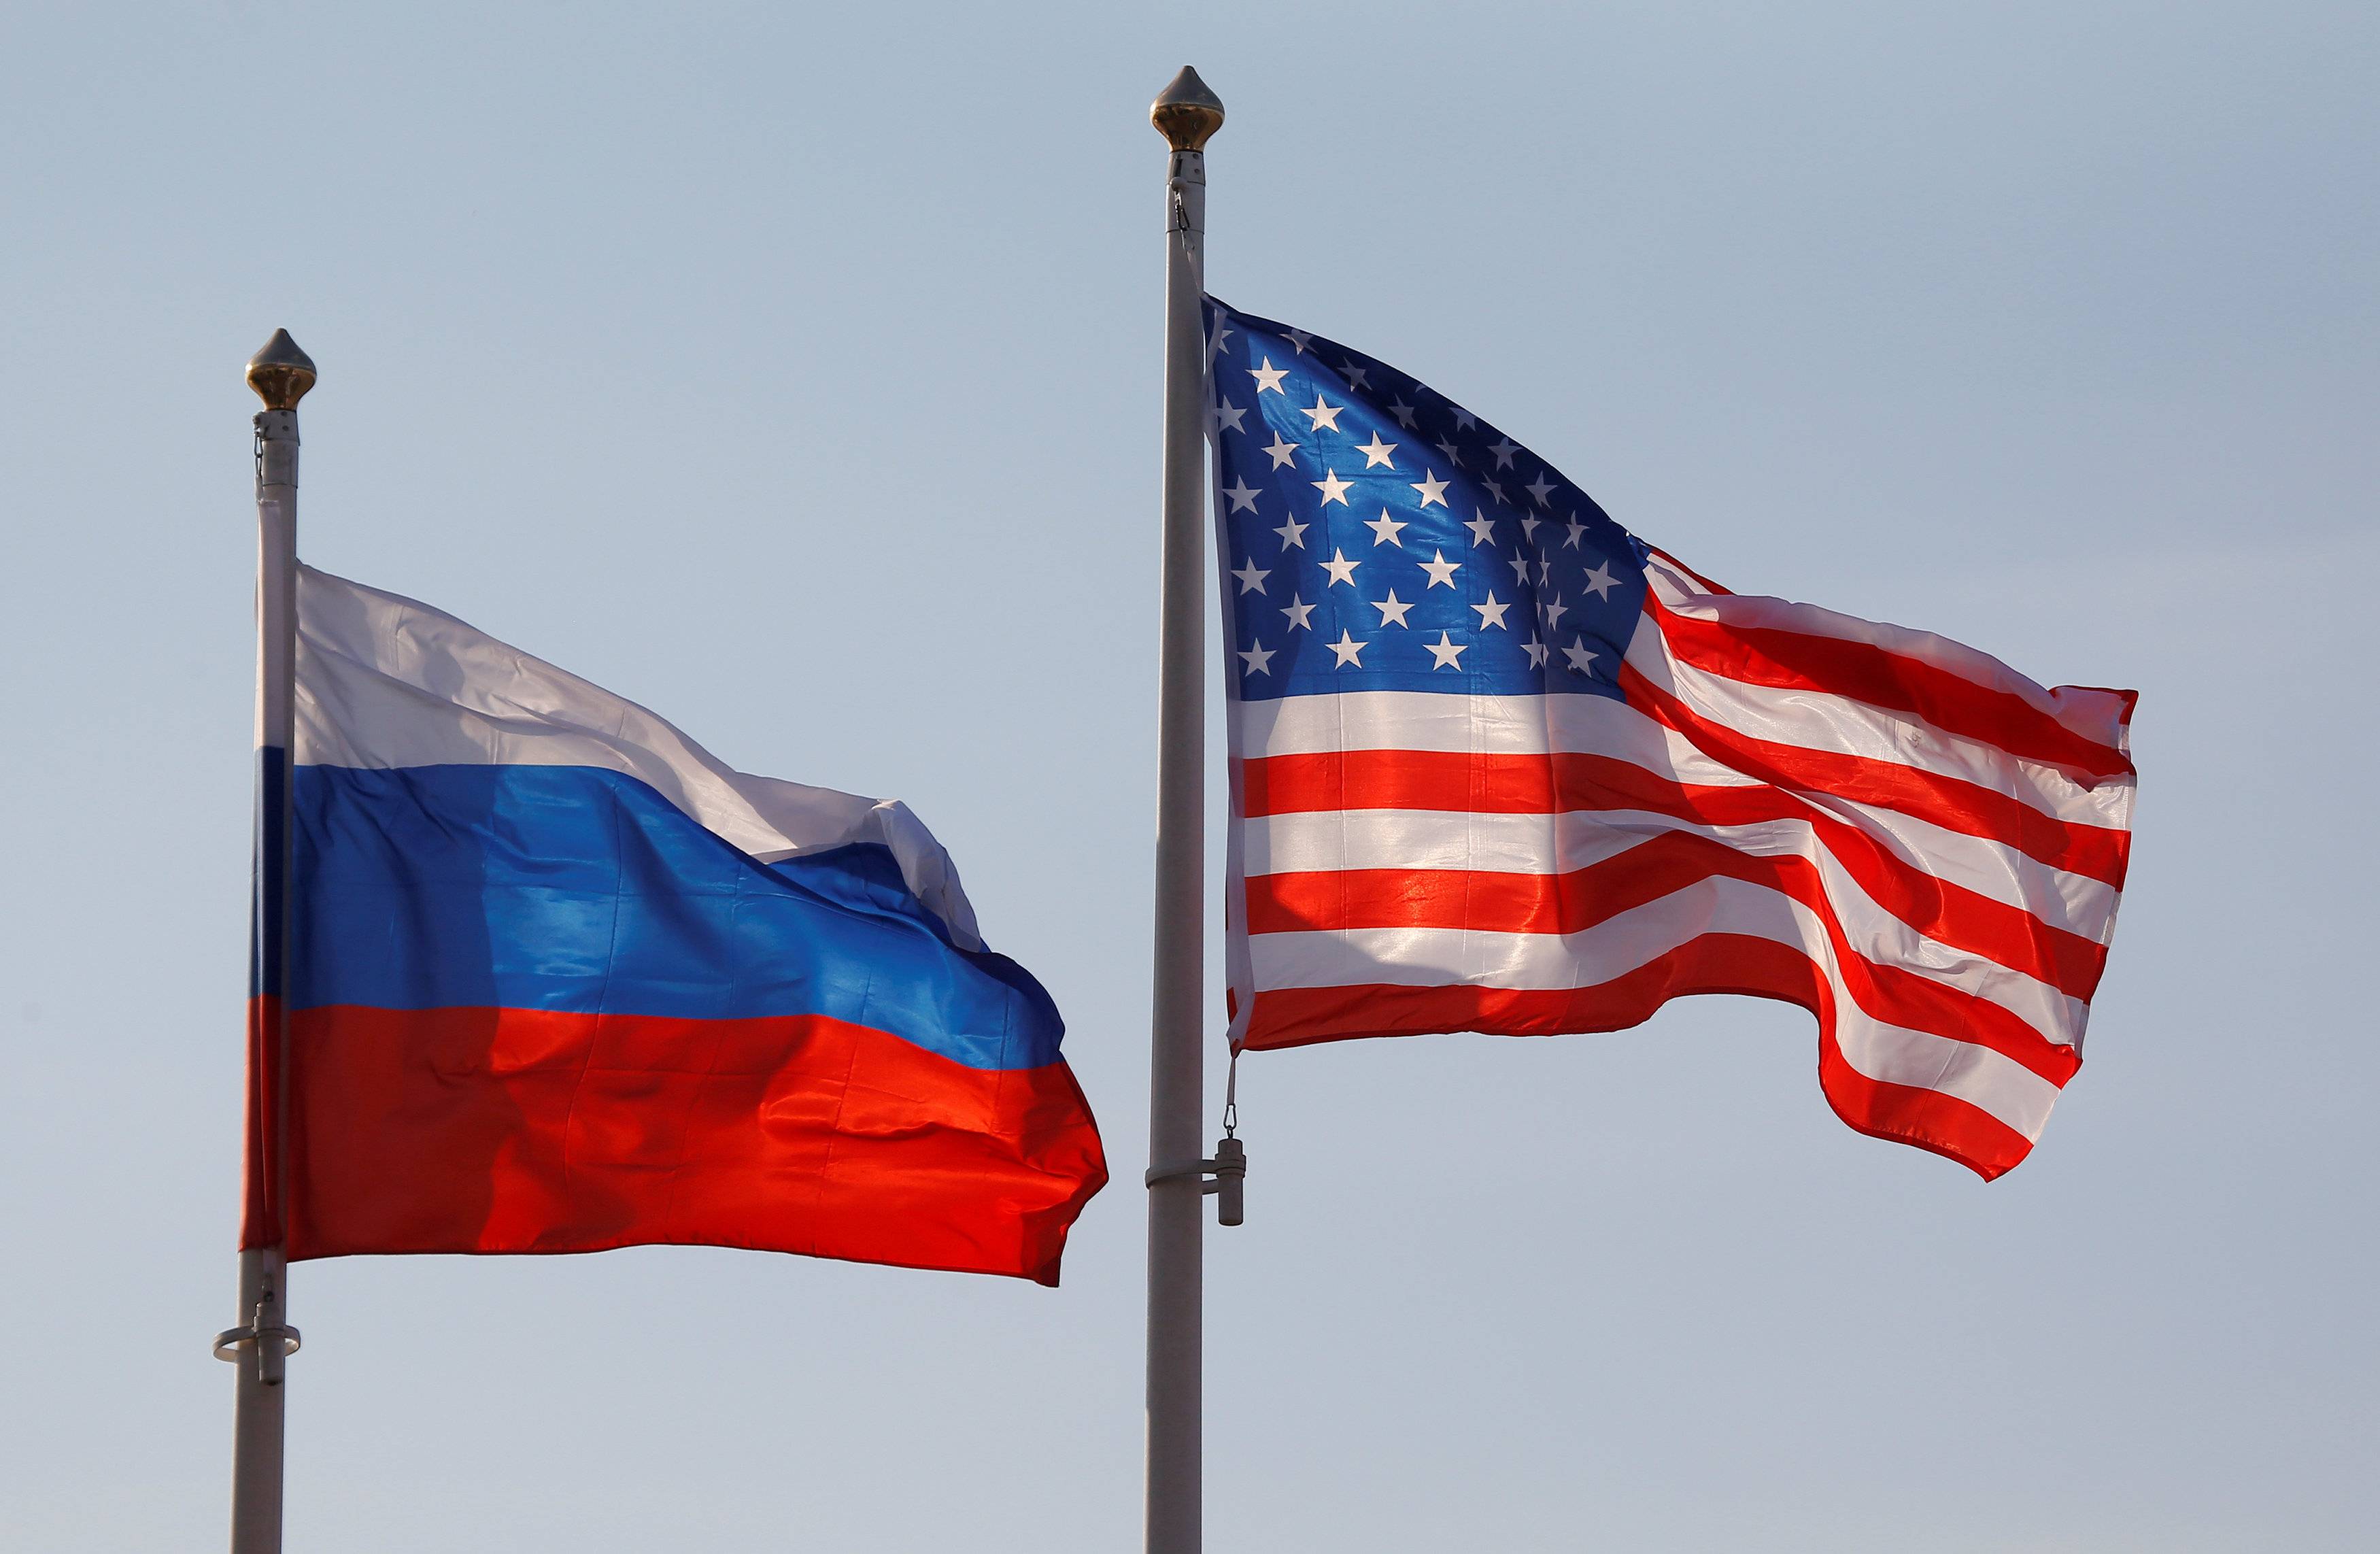 Americans in russia. Флаг России и США. Россия и США. Российский и американский флаги. Флаг США И России вместе.